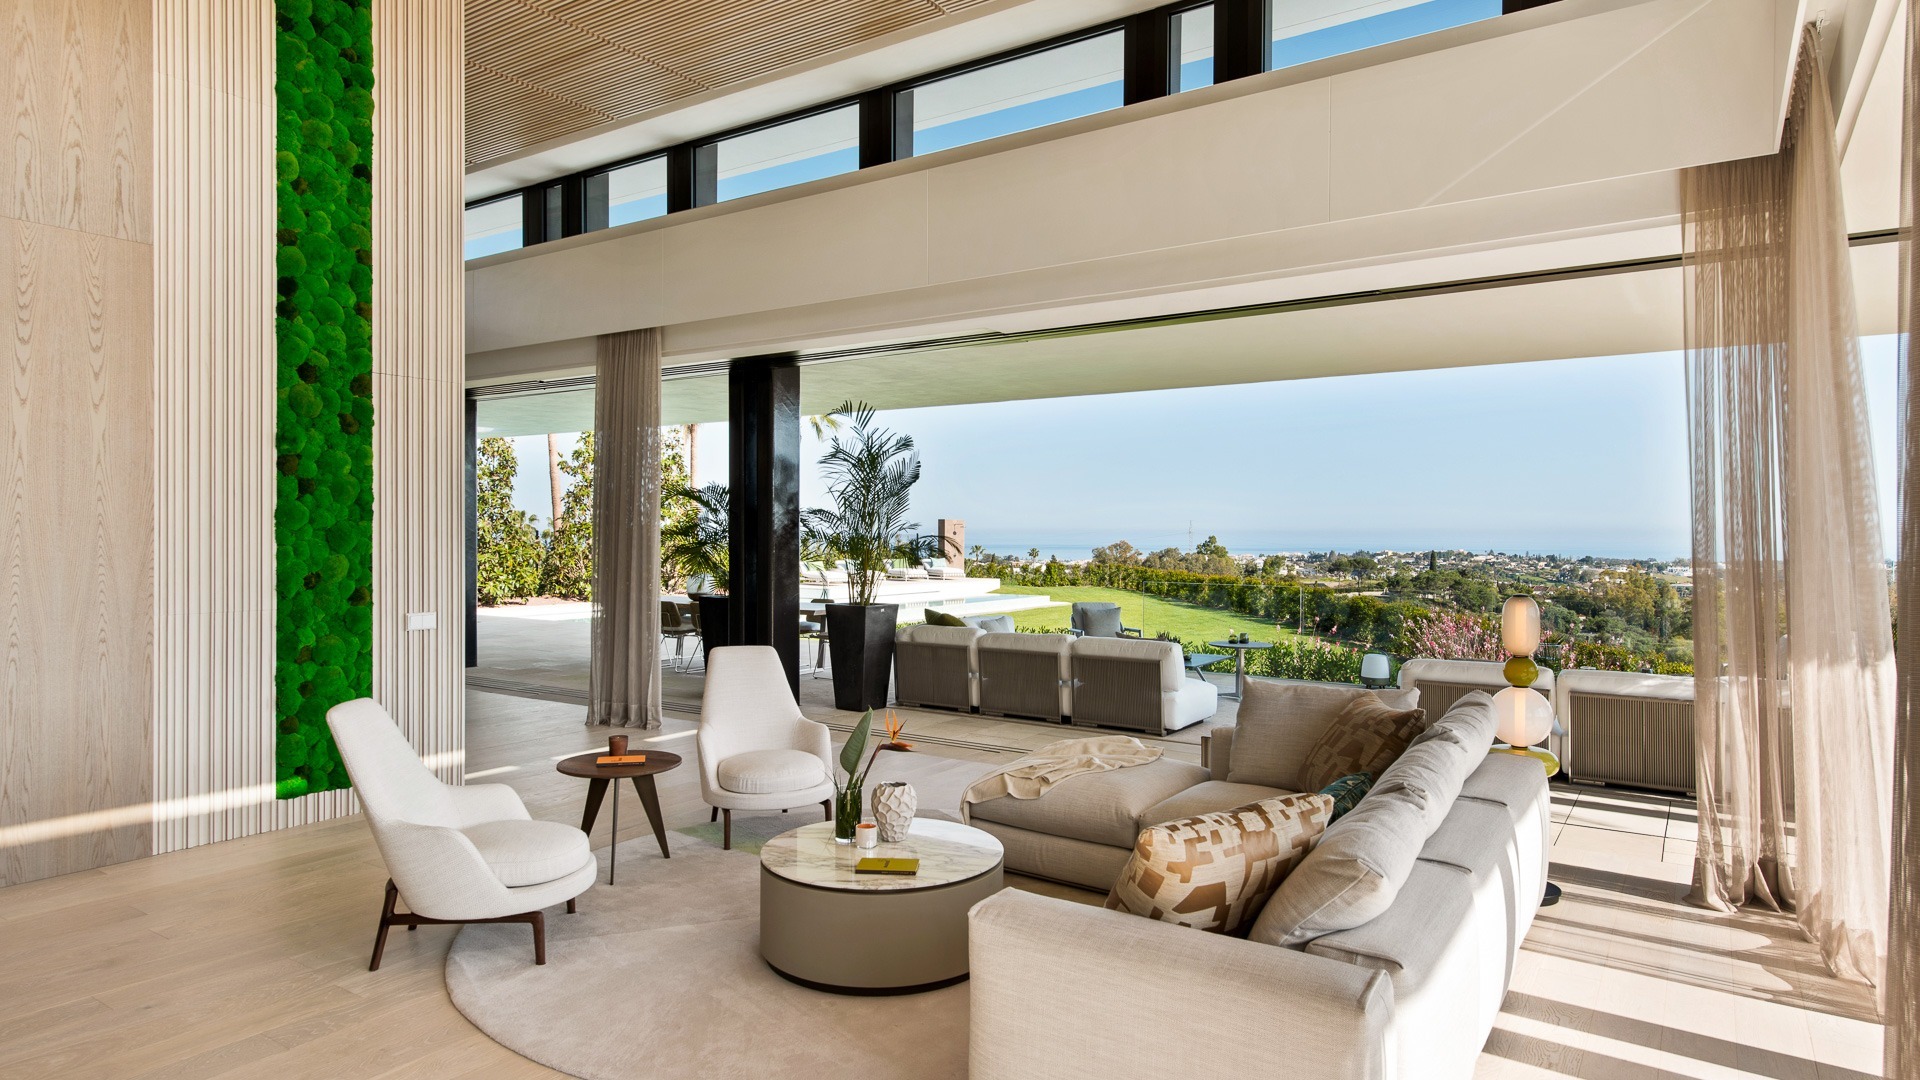 Exclusive top villa sitting room - El Herrojo - Benahavis